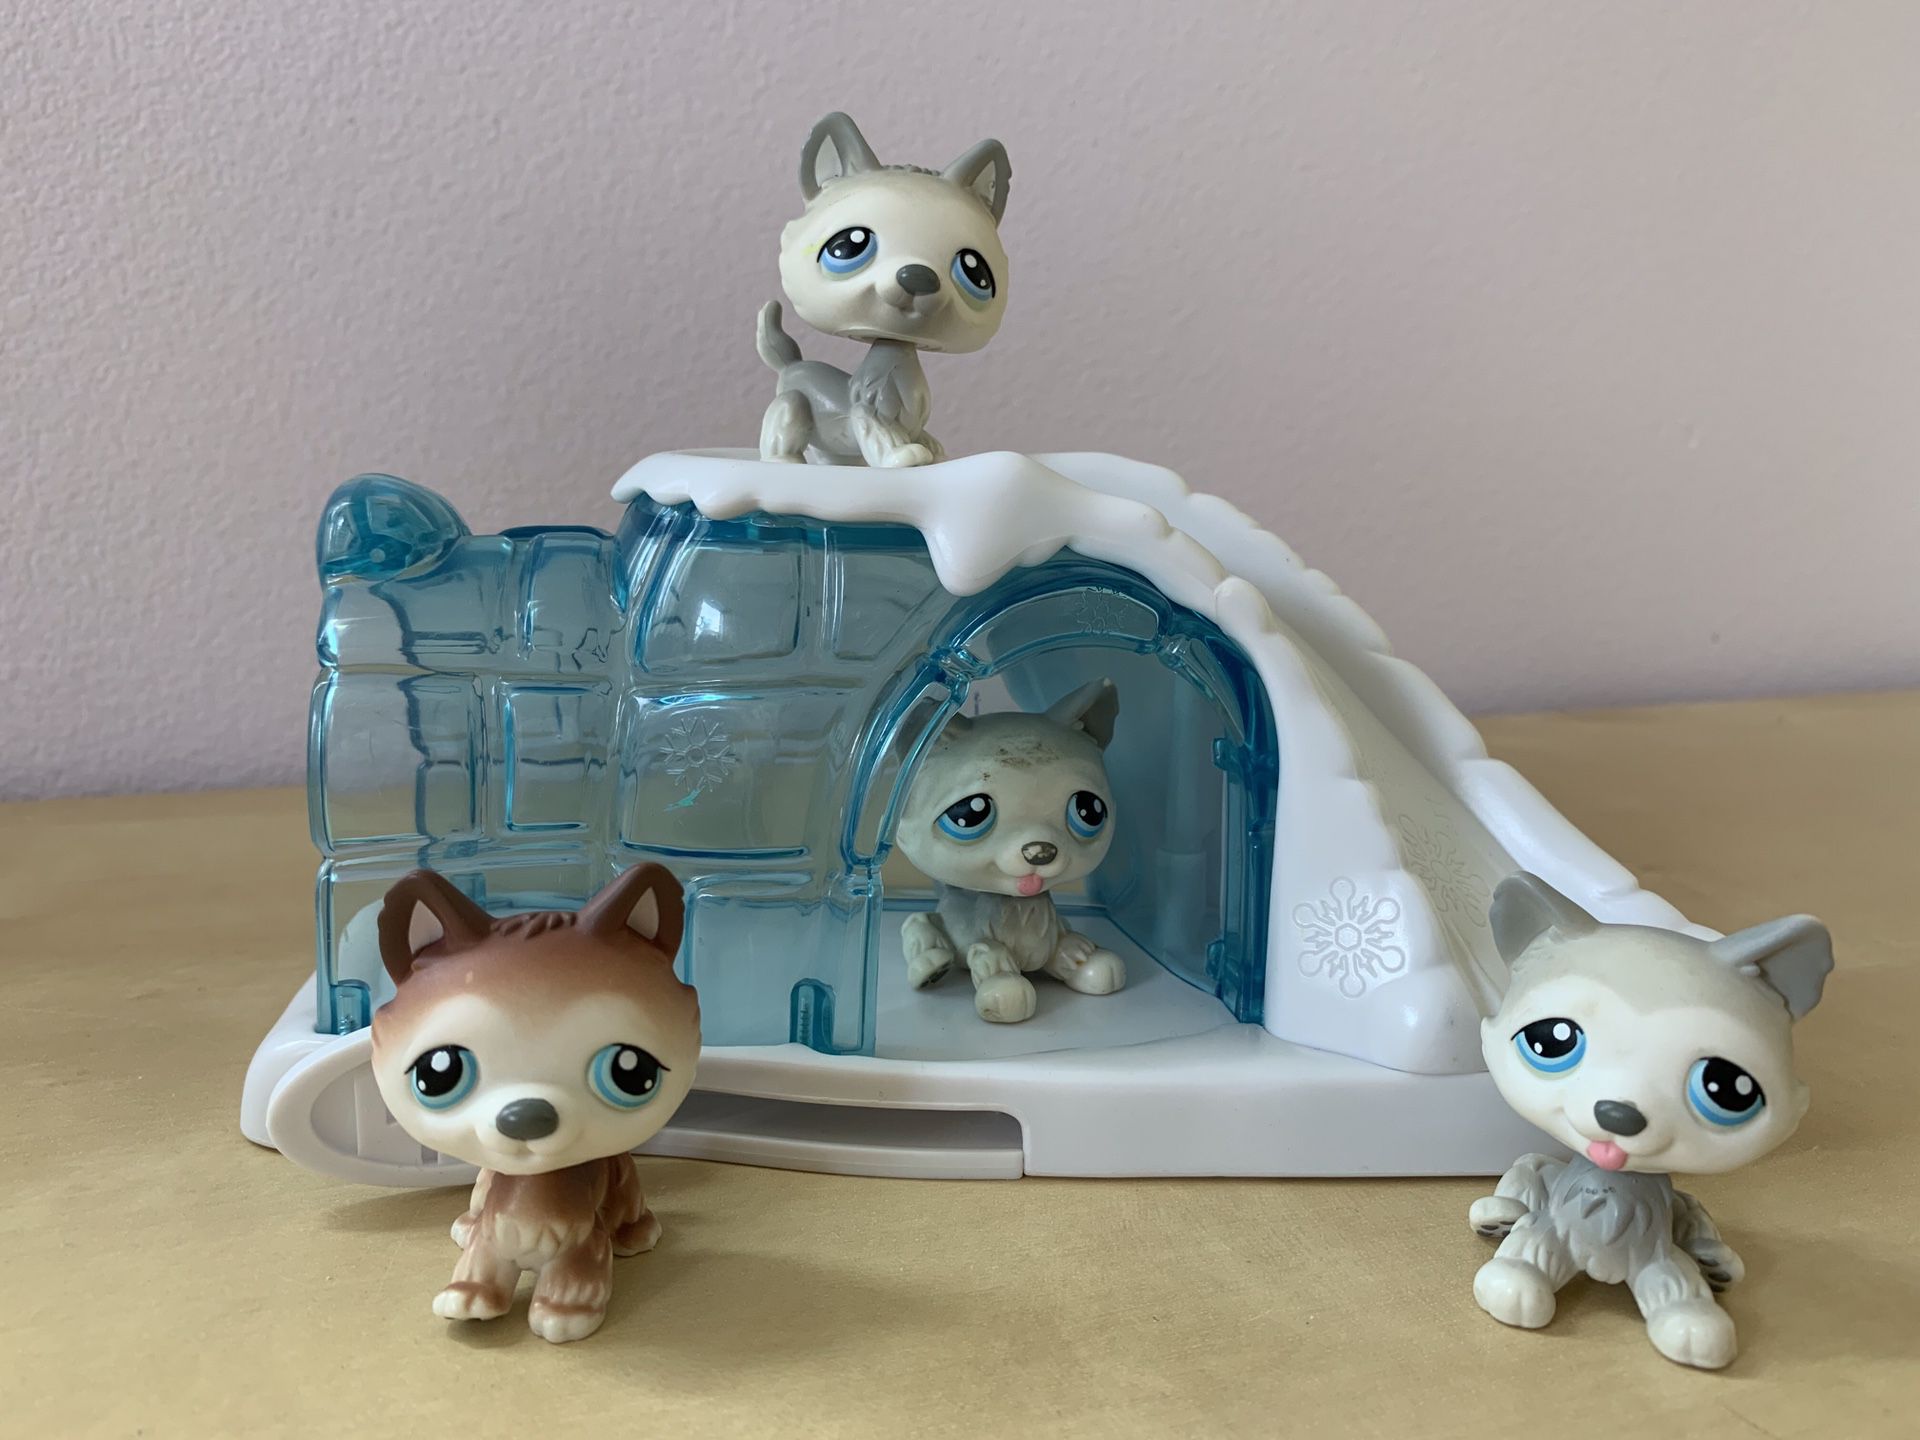 Littlest Pet Shop igloo & snow slide